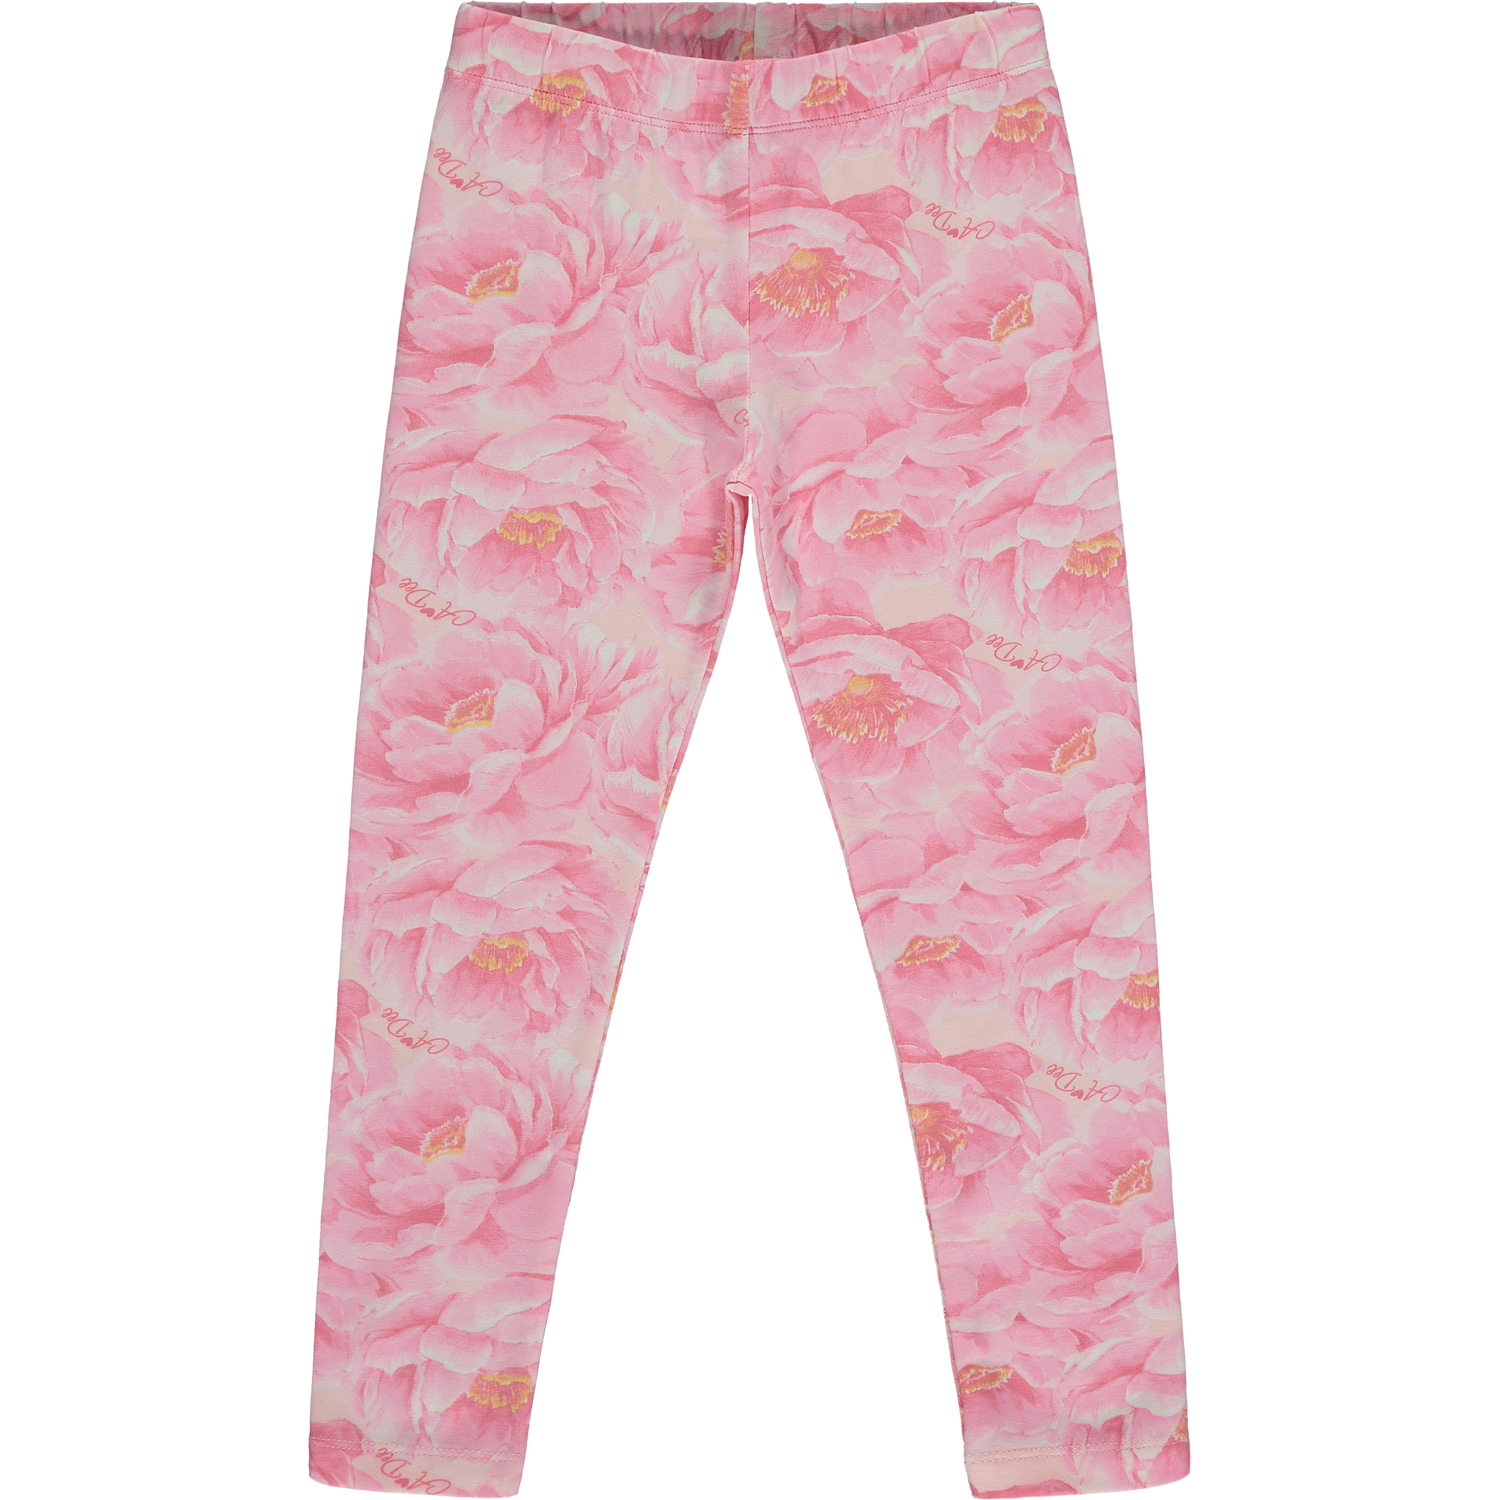 A’dee Addison Peony Dreams compleet roze leggingset met print legging